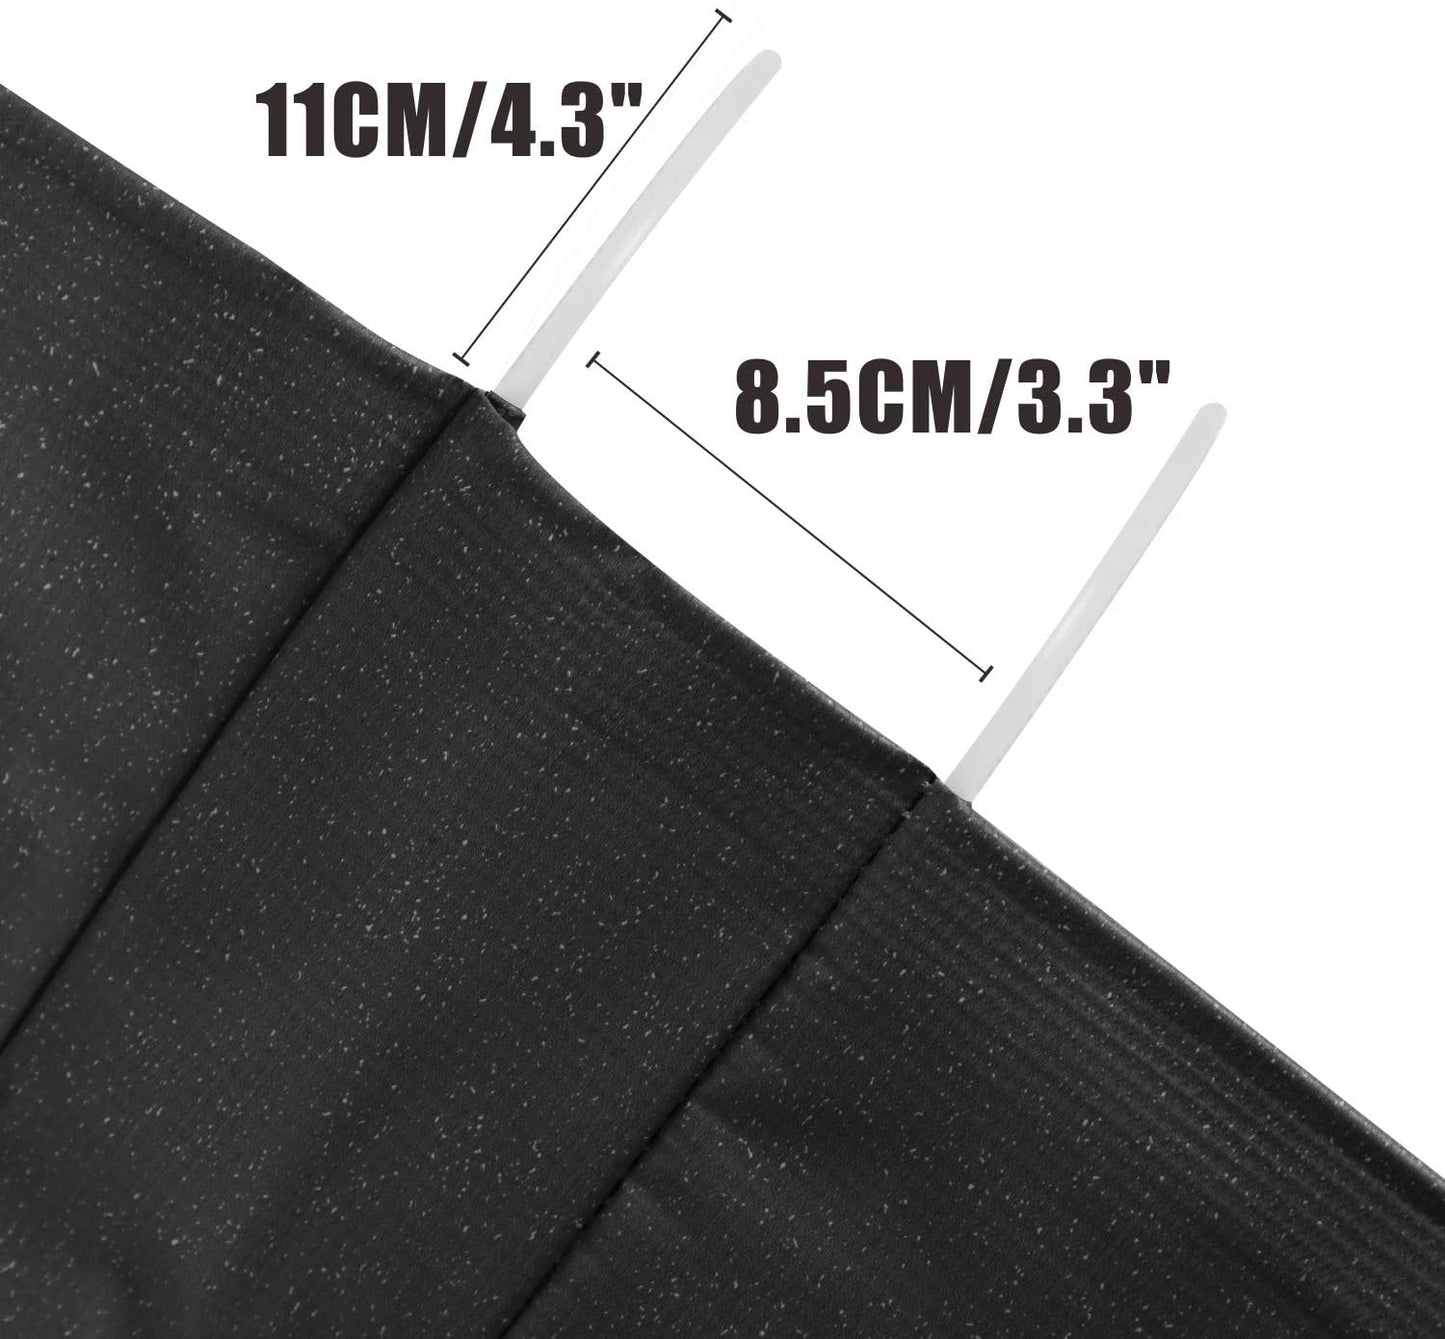 HITORHIKE RV Awning Fabric Replacement Standard Grade Premium Vinyl